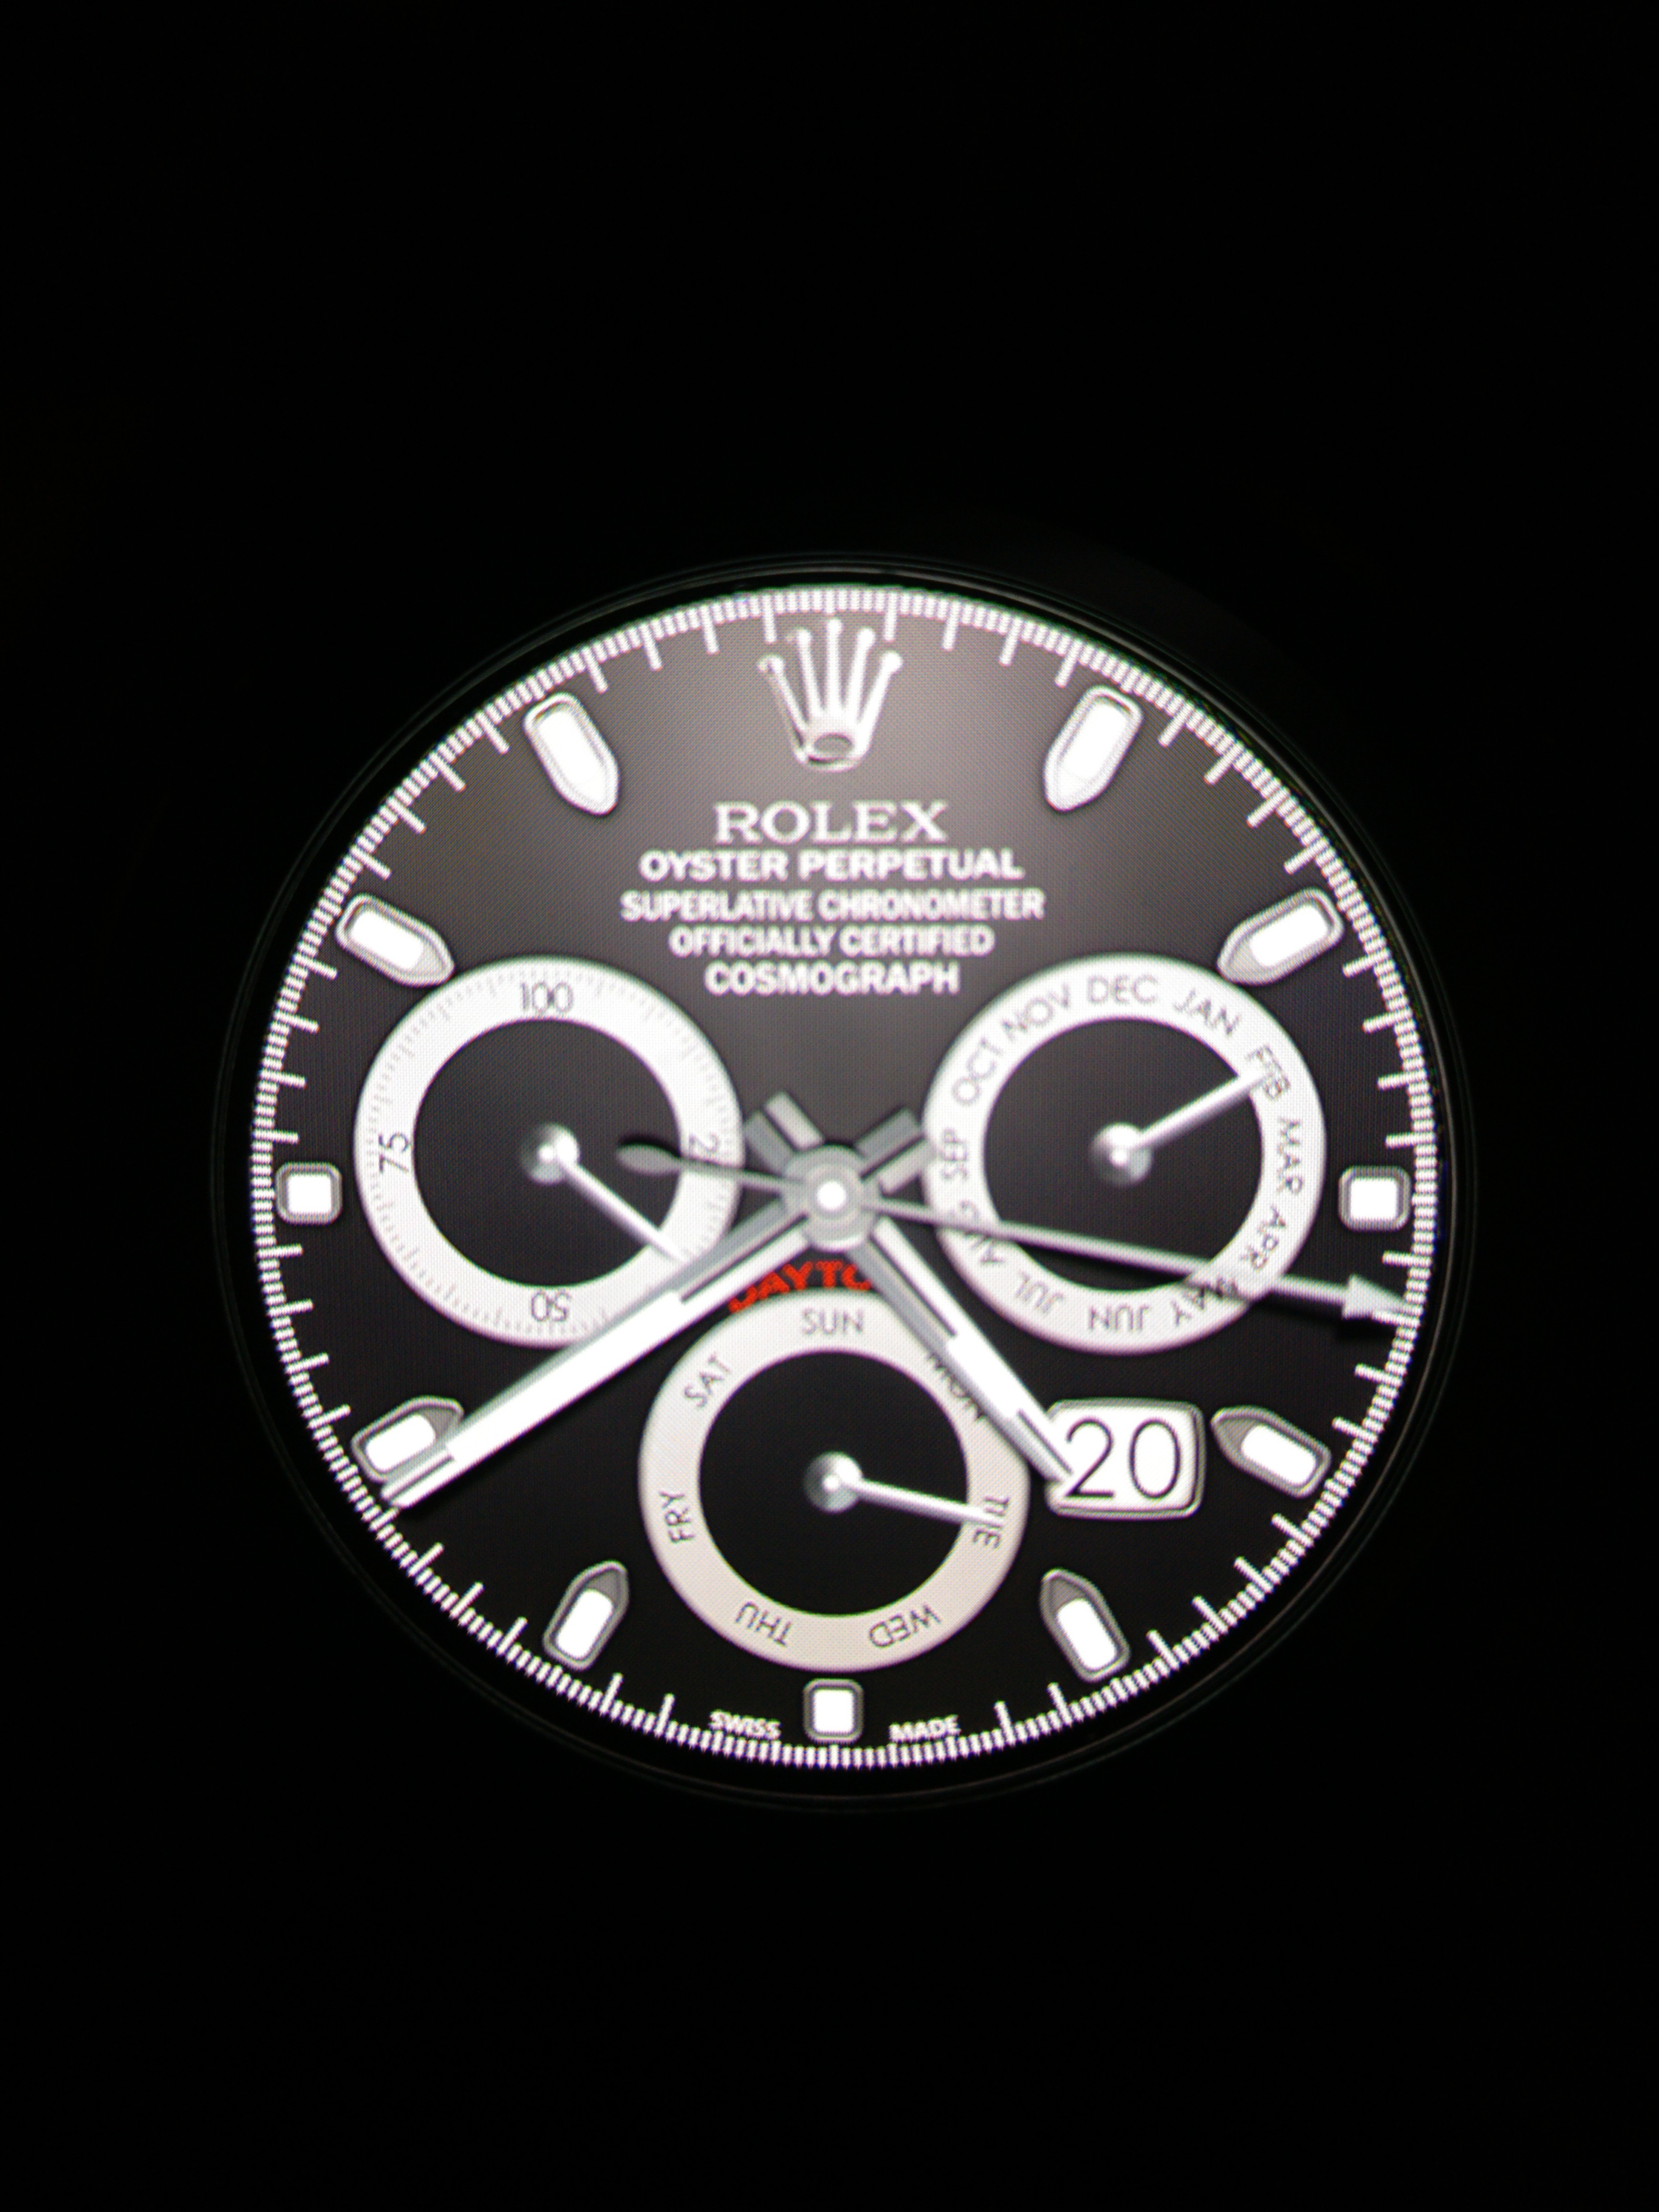 Rolex Daytona - KW88, LEMFO etc face engine - Full Watch